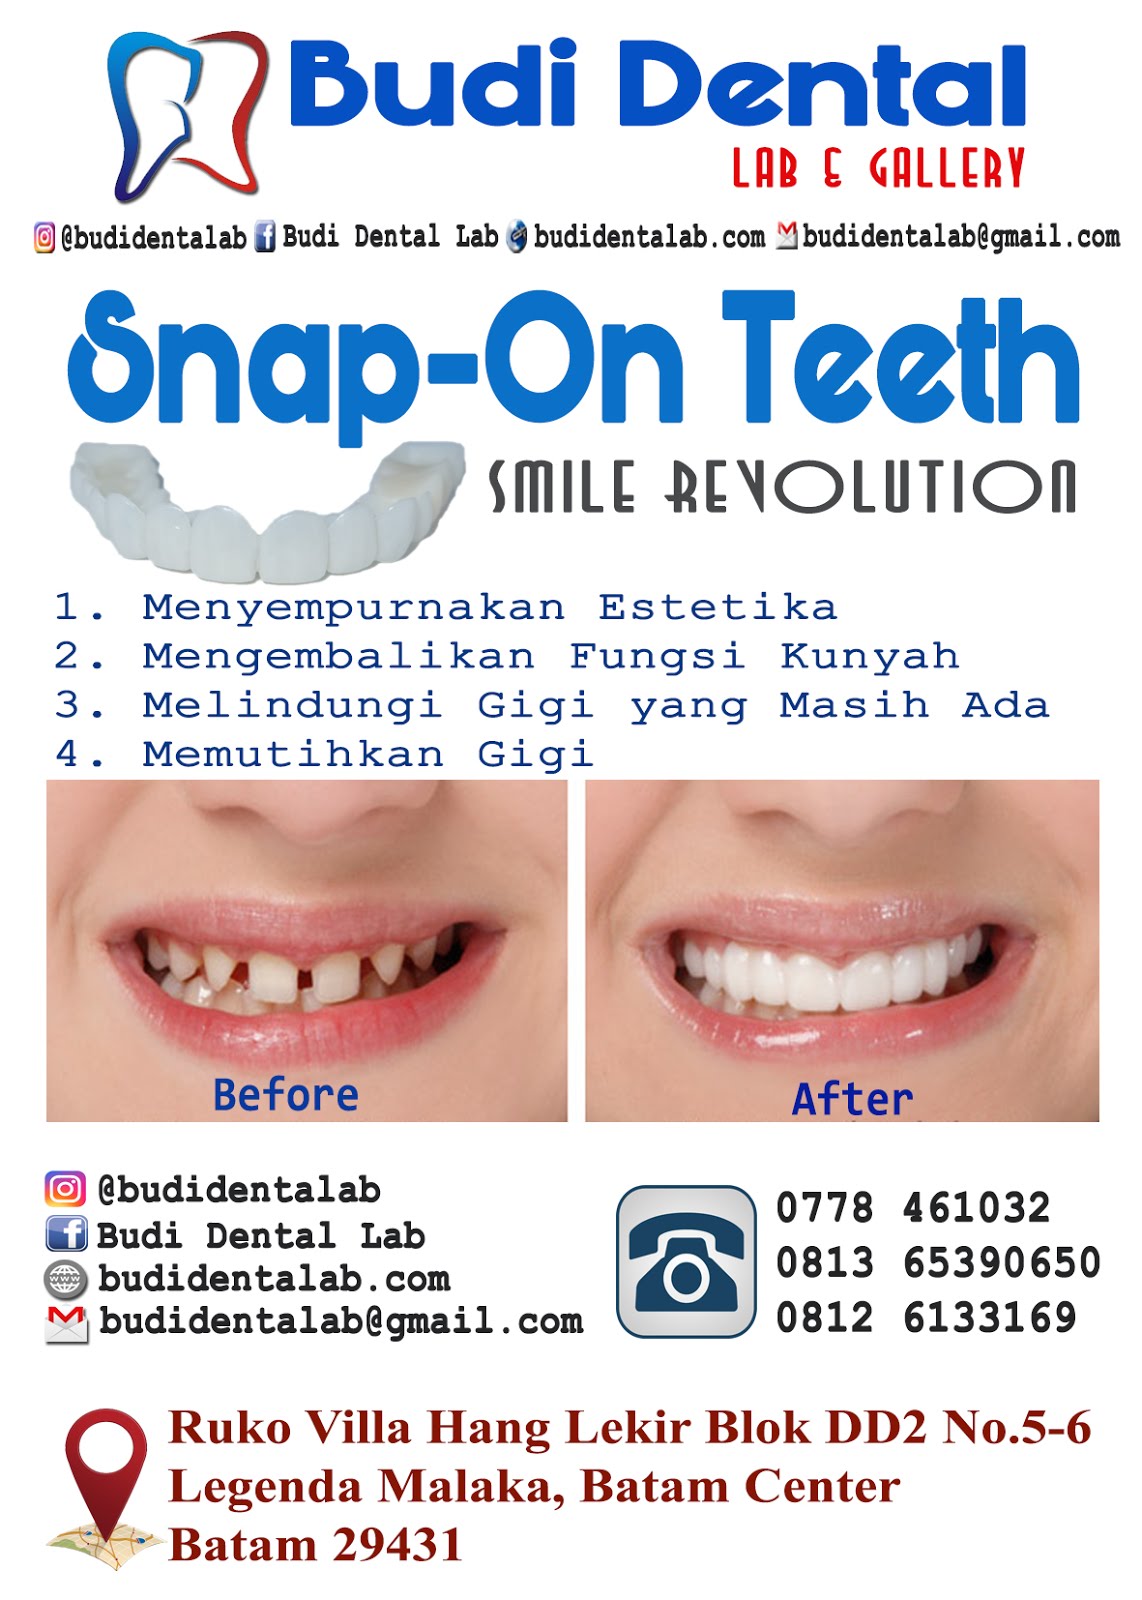 Snap-On Teeth